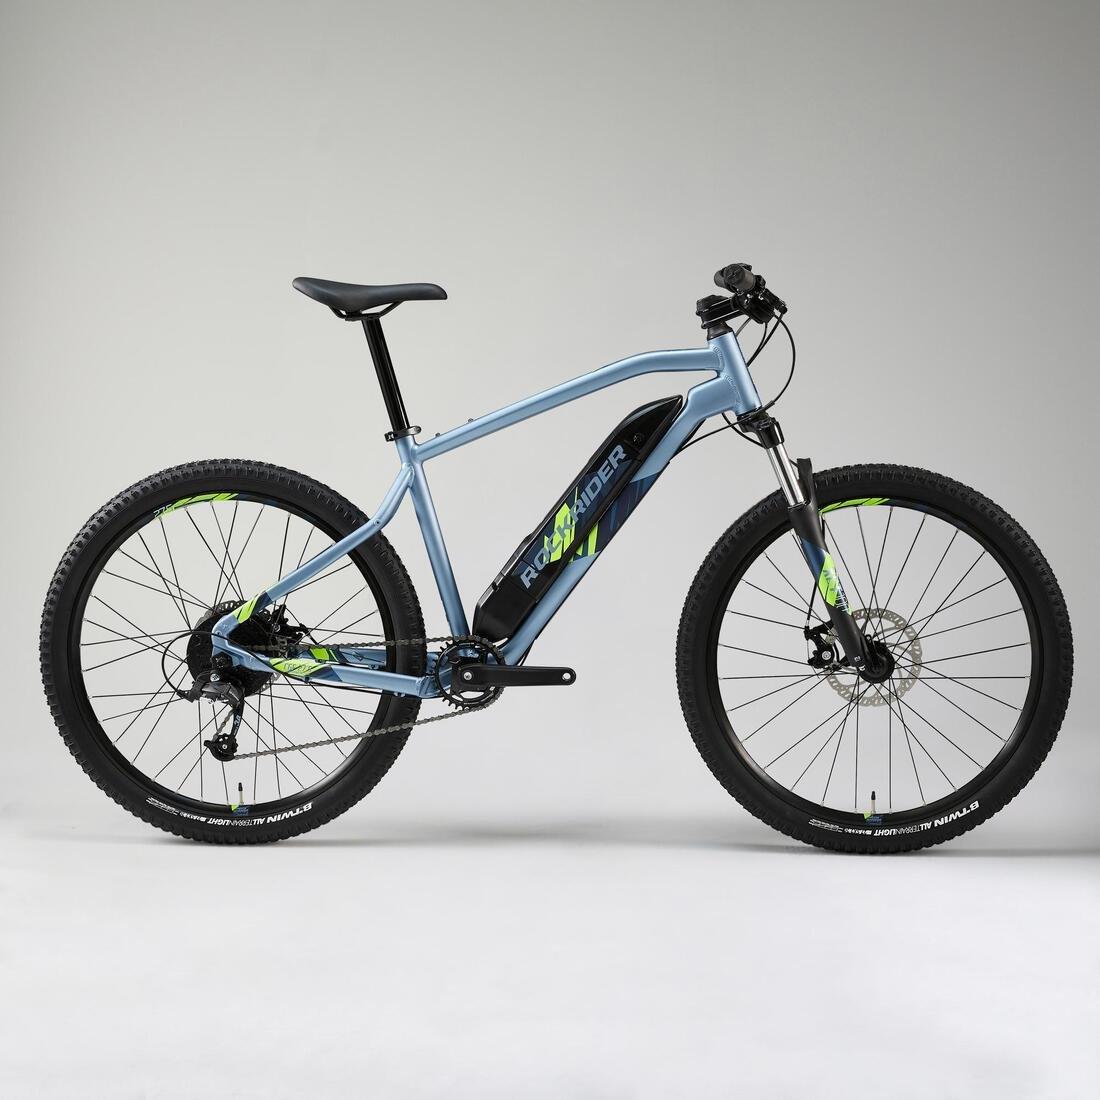 ROCKRIDER - 27.5 Inch Electric Mountain Bike E-ST 100 - Blue, Faded denim